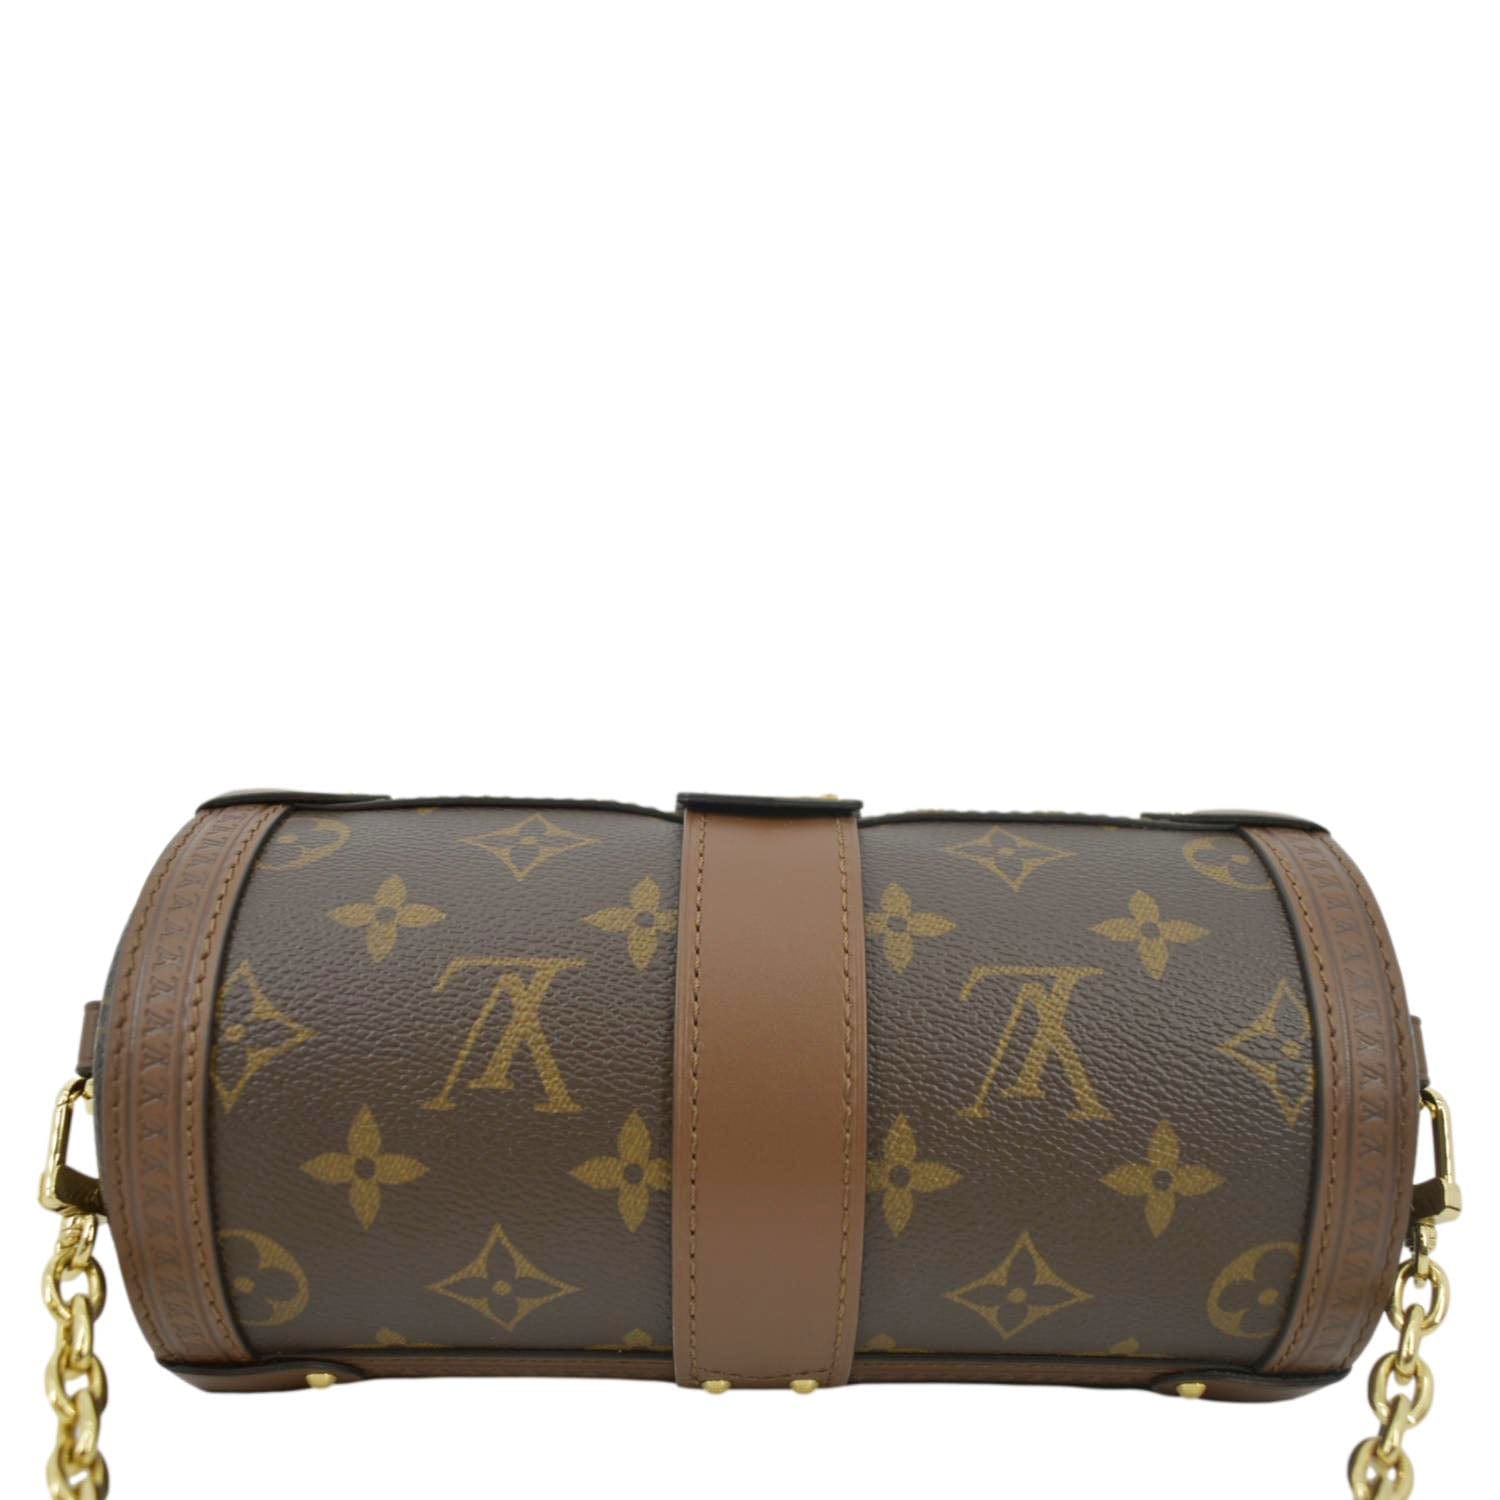 Louis Vuitton Papillon Trunk Bag